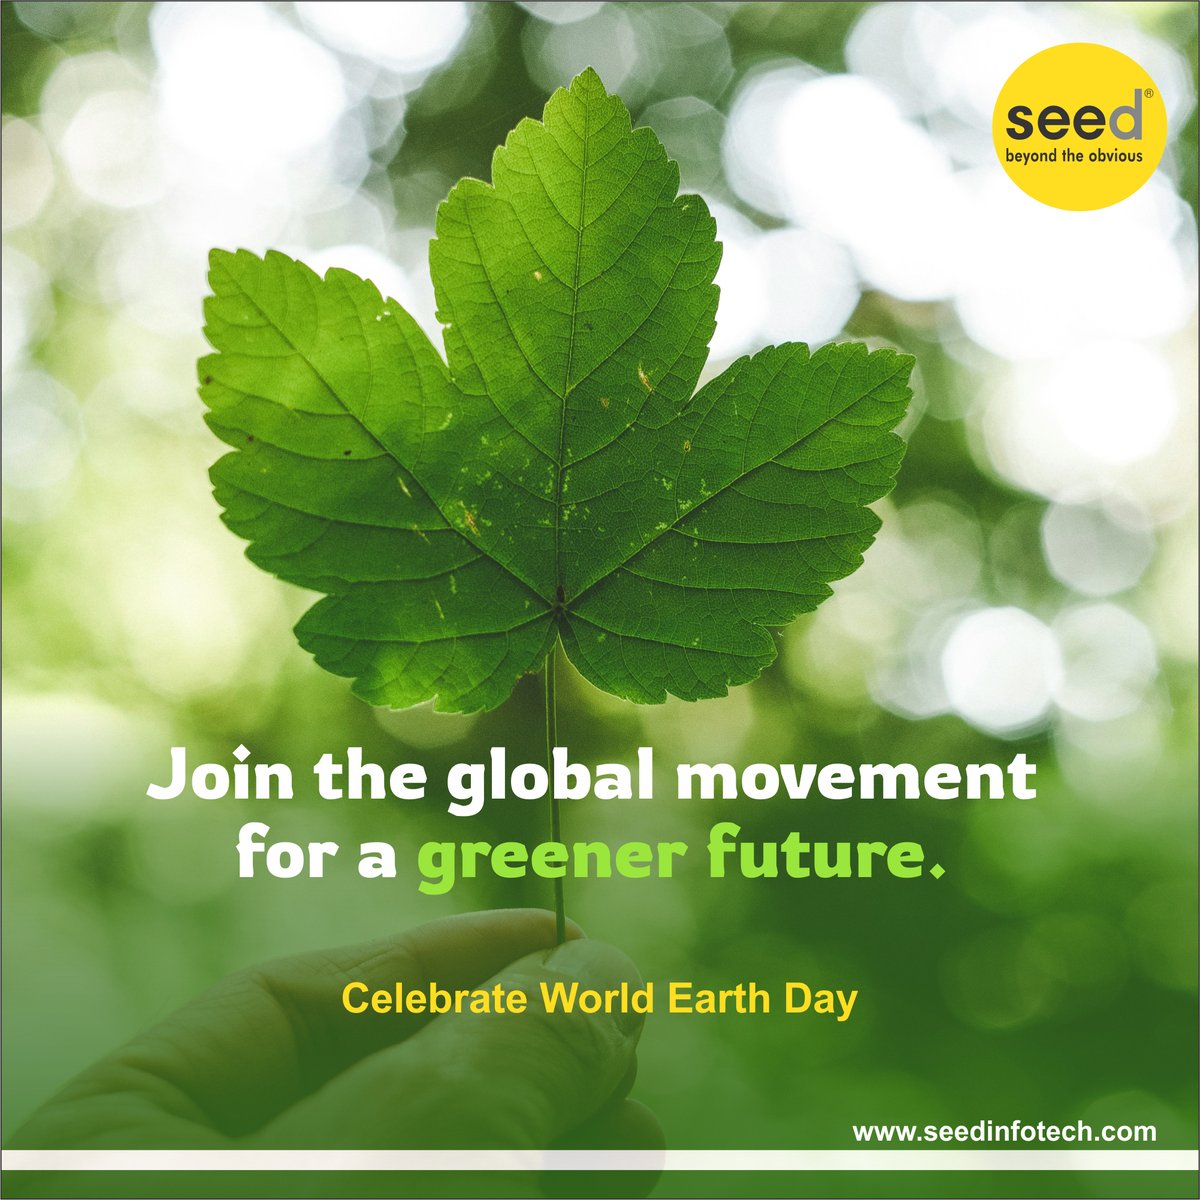 Go green
Let's celebrate Earth Day 

visit: seedinfotech.com
Call: 9225520000

#earthday #ittraining